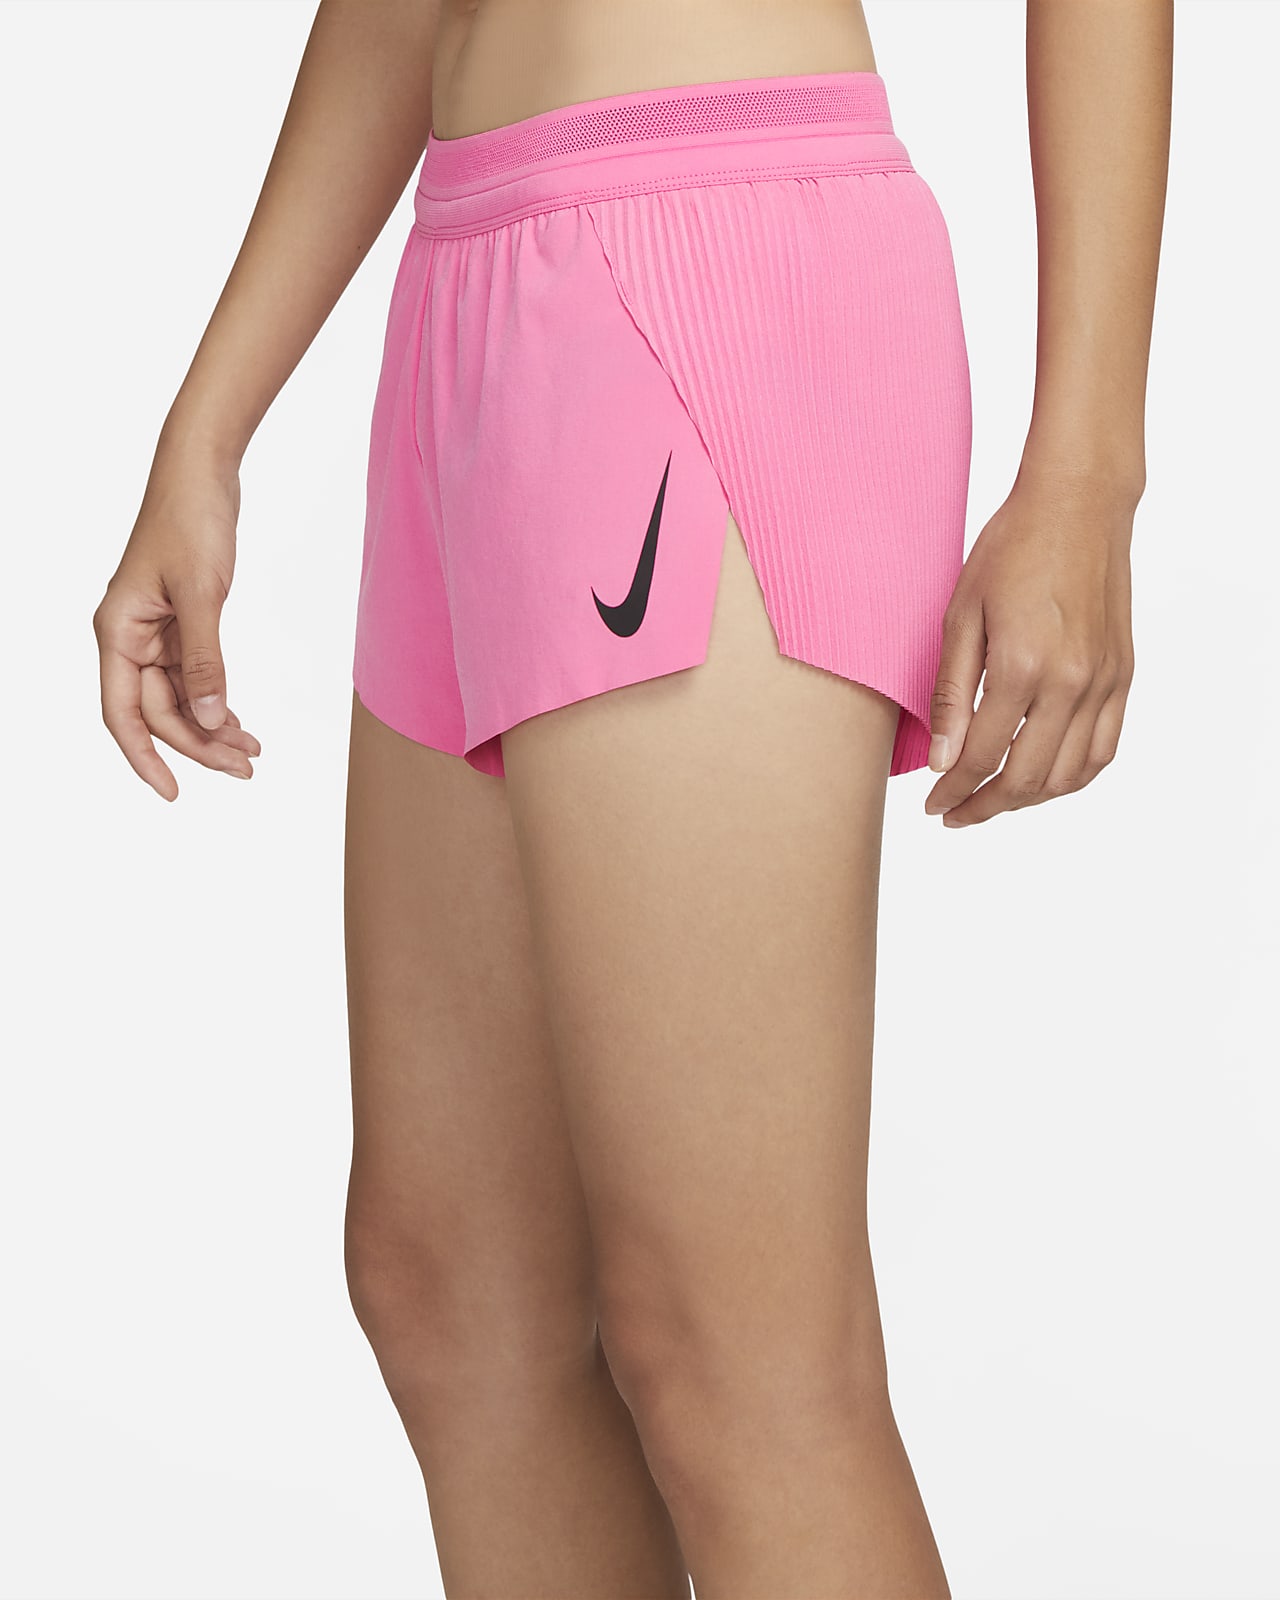 Nike Women's Aeroswift Tight Running Shorts – Heartbreak Hill